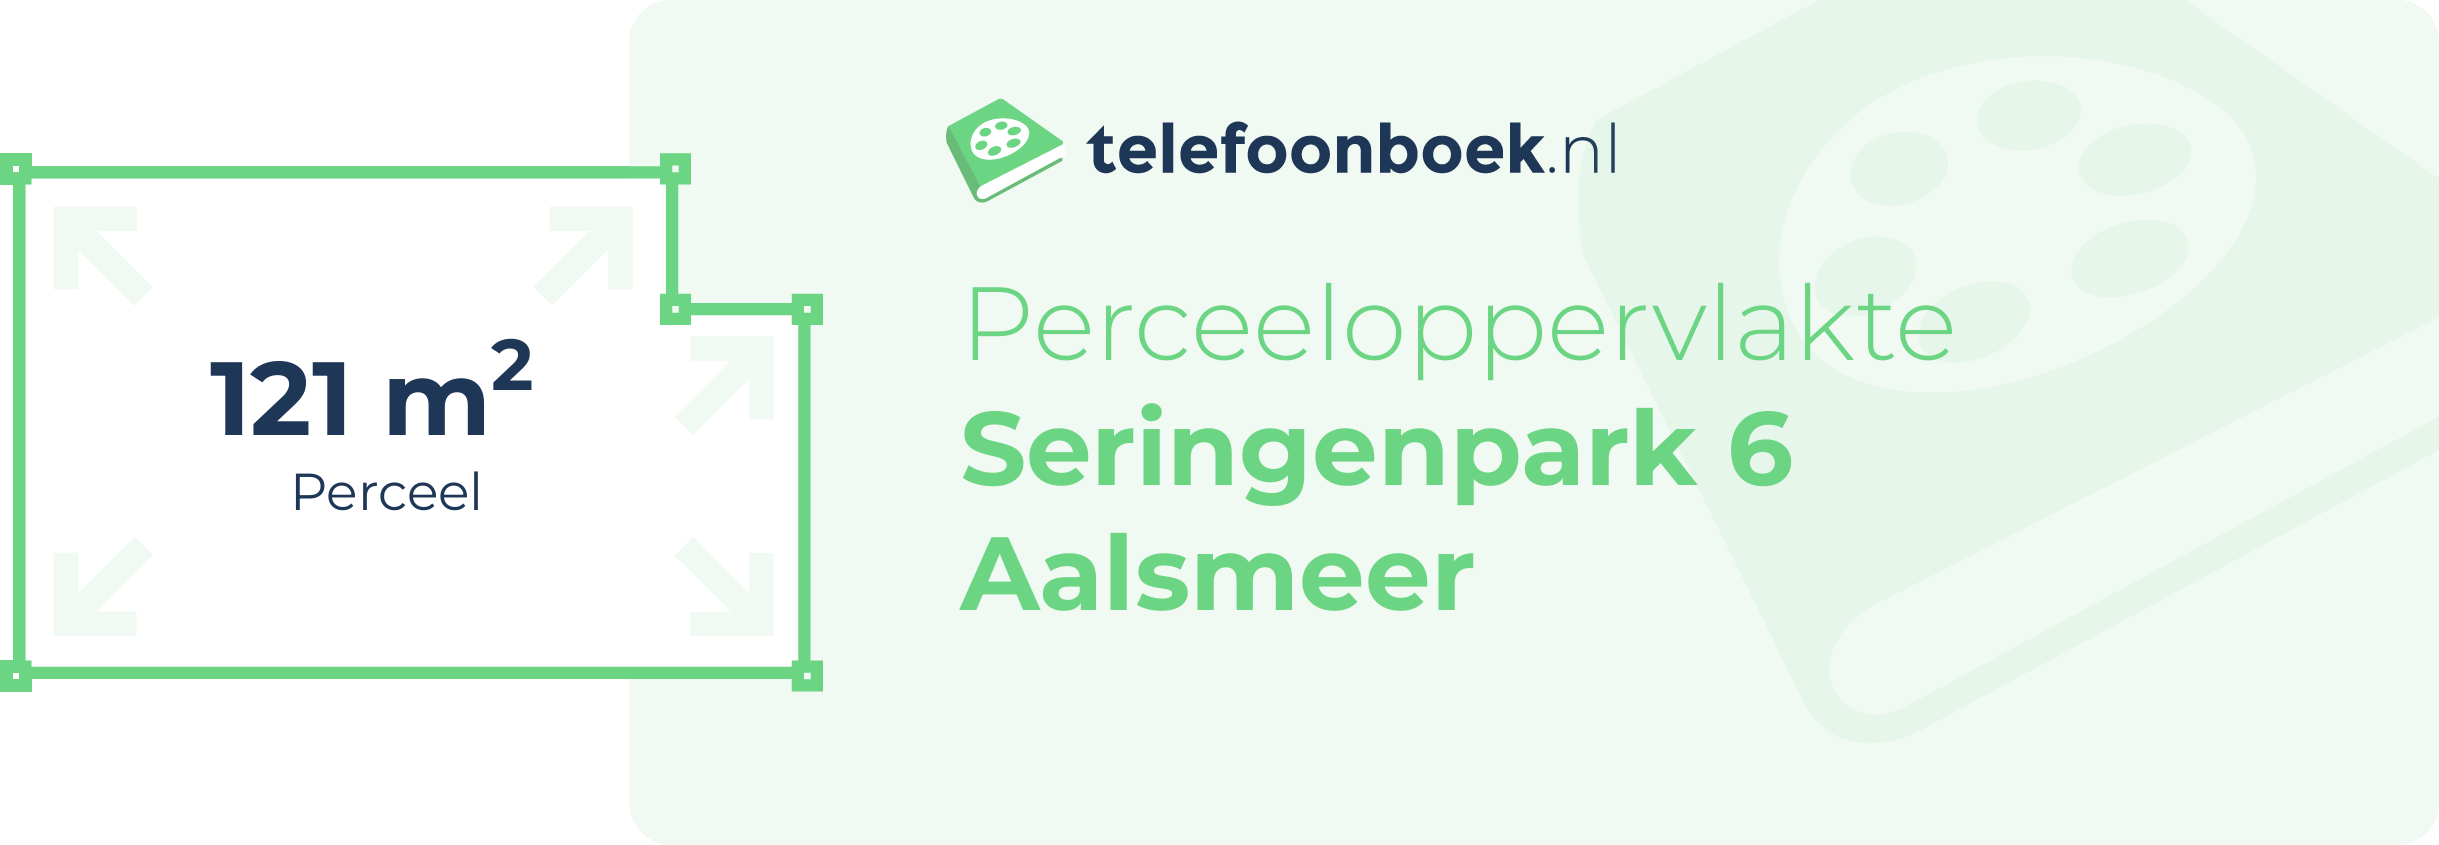 Perceeloppervlakte Seringenpark 6 Aalsmeer